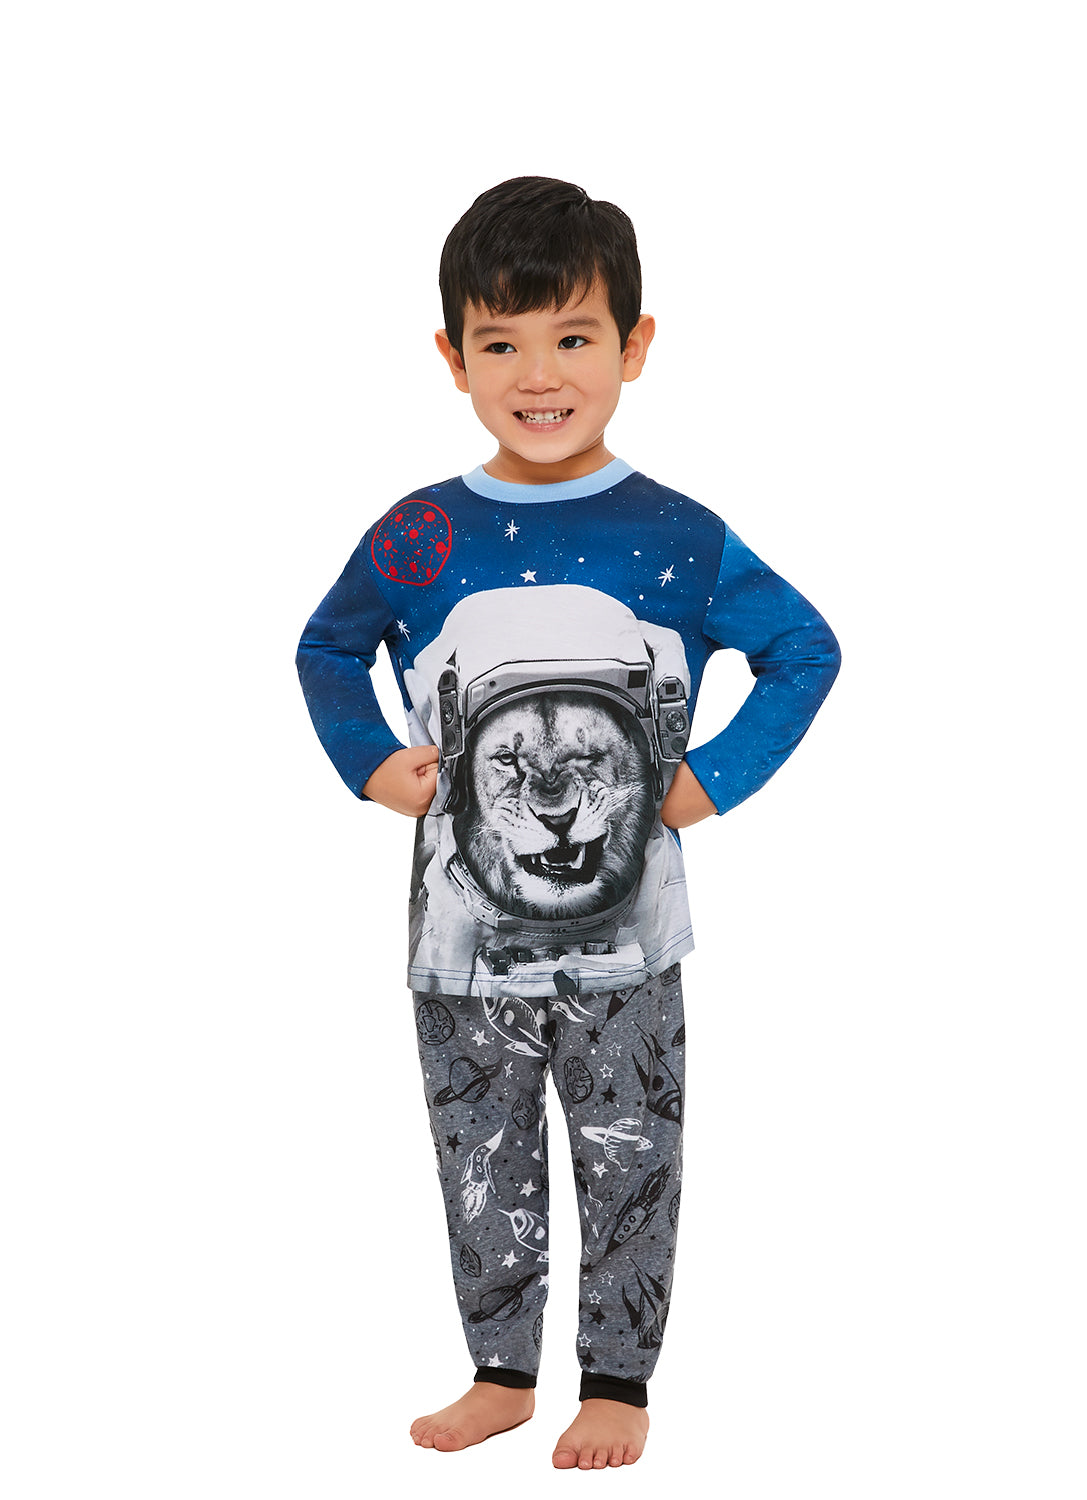 Kid wearing Astronaut Pajama Set